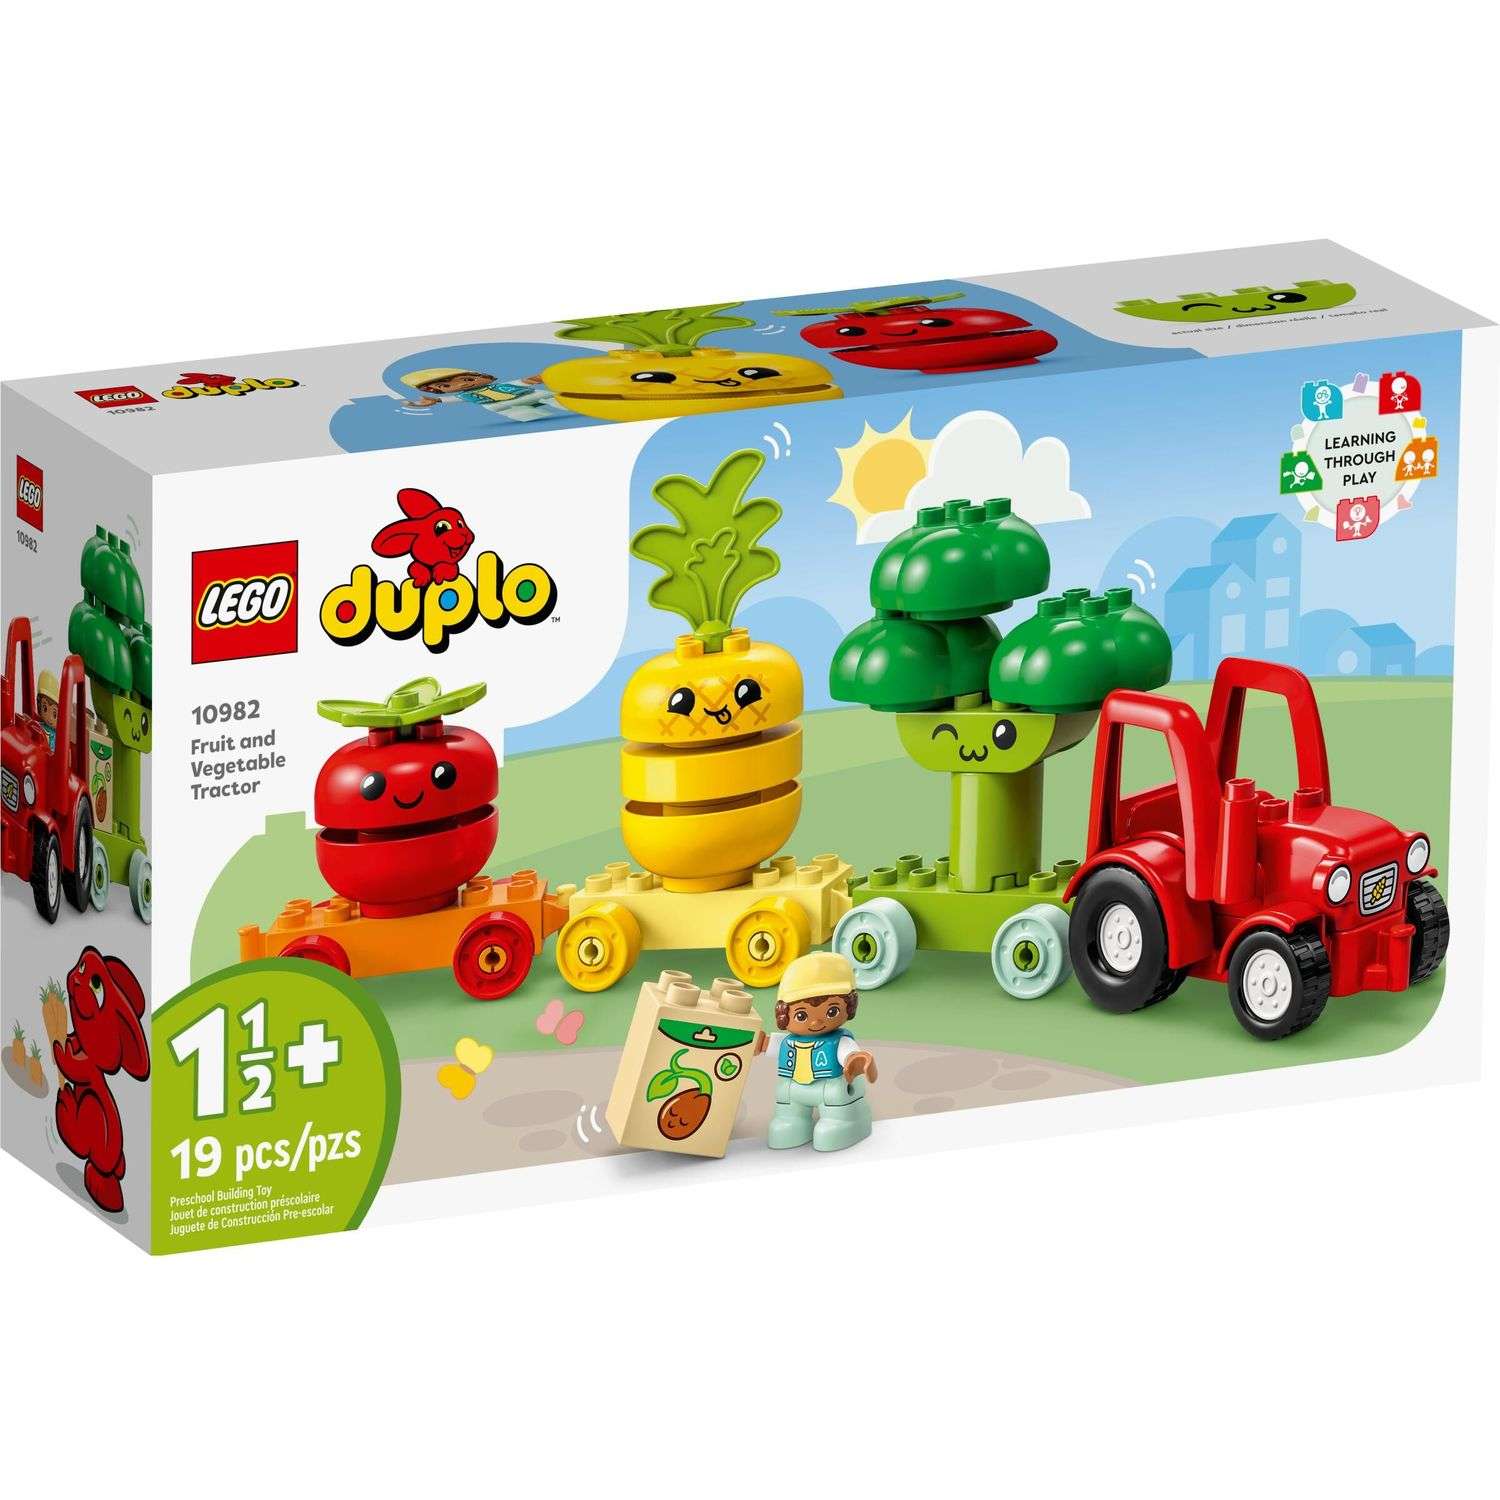 Конструктор Lego DUPLO Fruit and Vegetable Tractor 10982 - фото 1